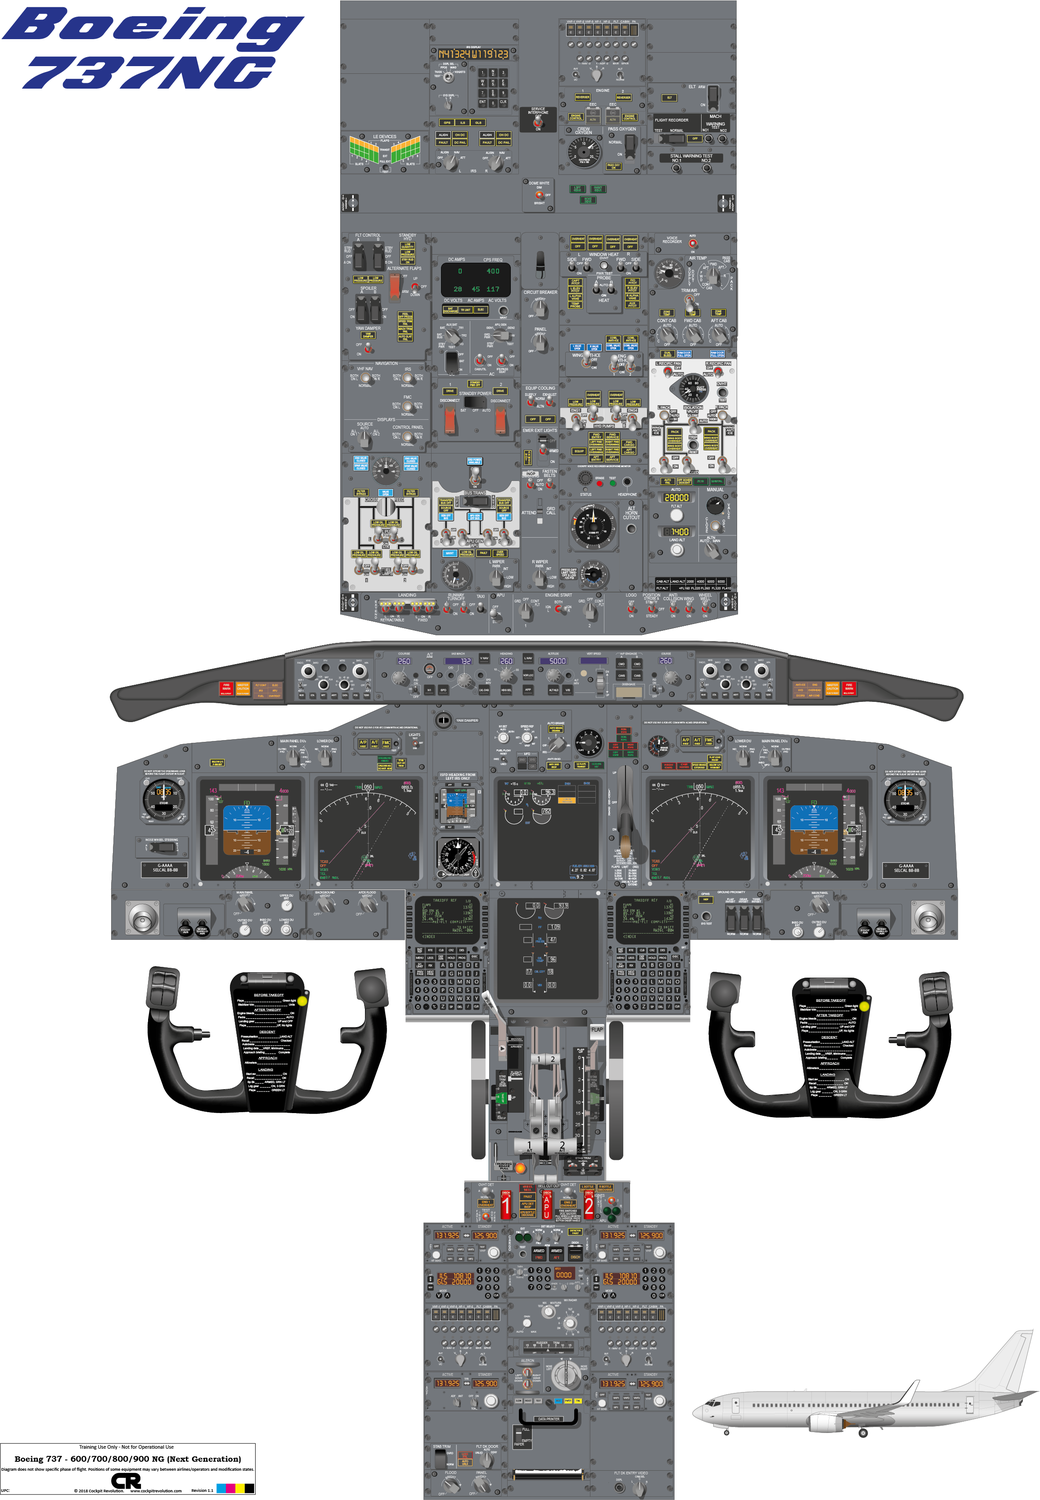 Boeing 737 Original, Classic, NG & MAX Cockpit Posters - Digital Download